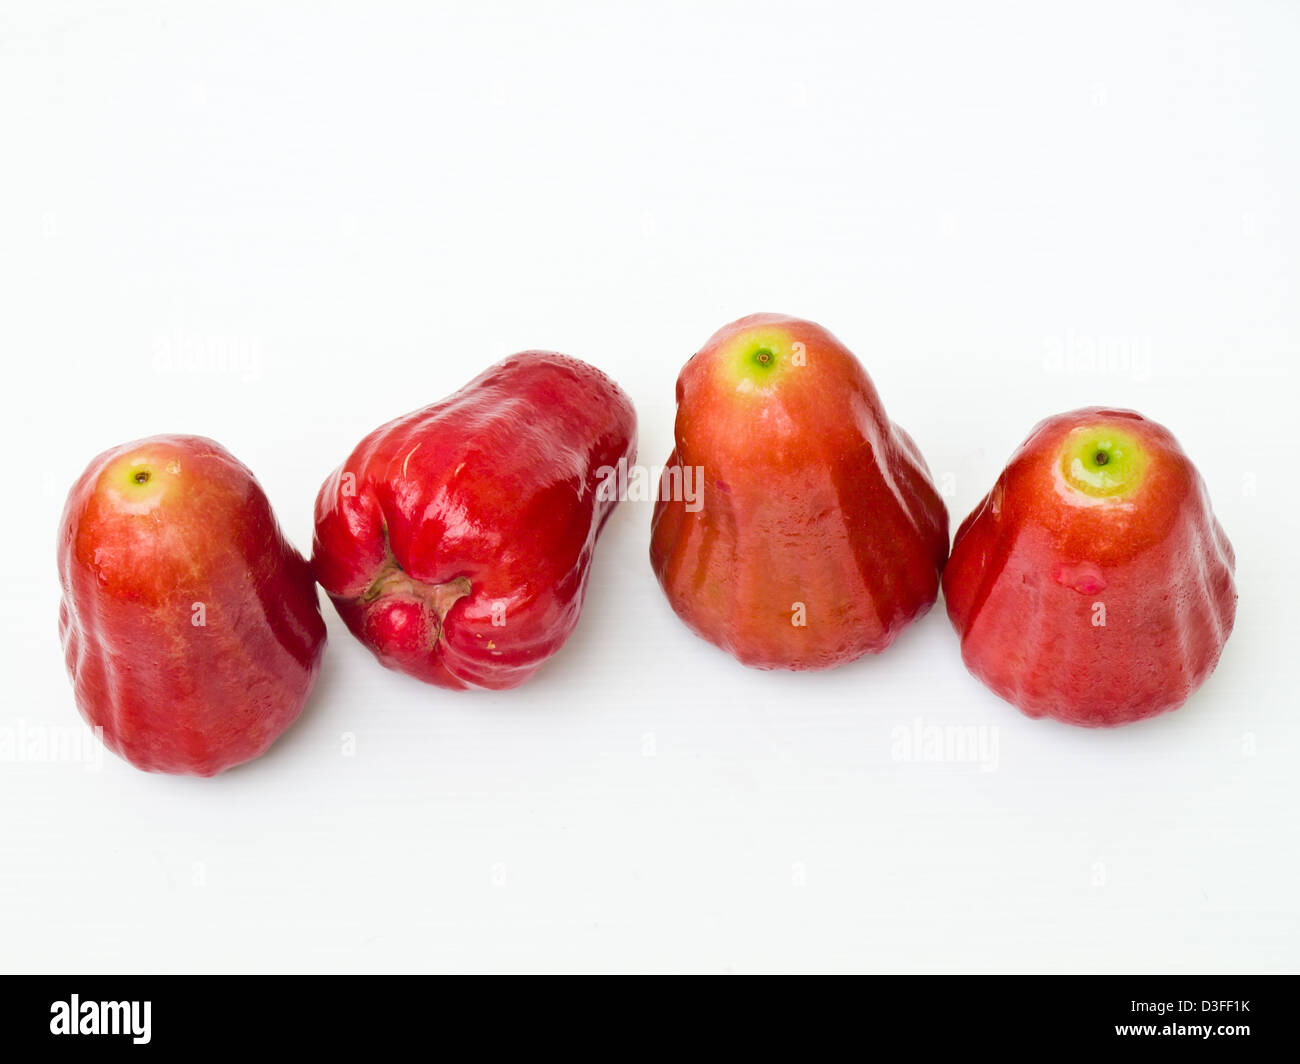 Rose apples, Syzygium jambos Stock Photo